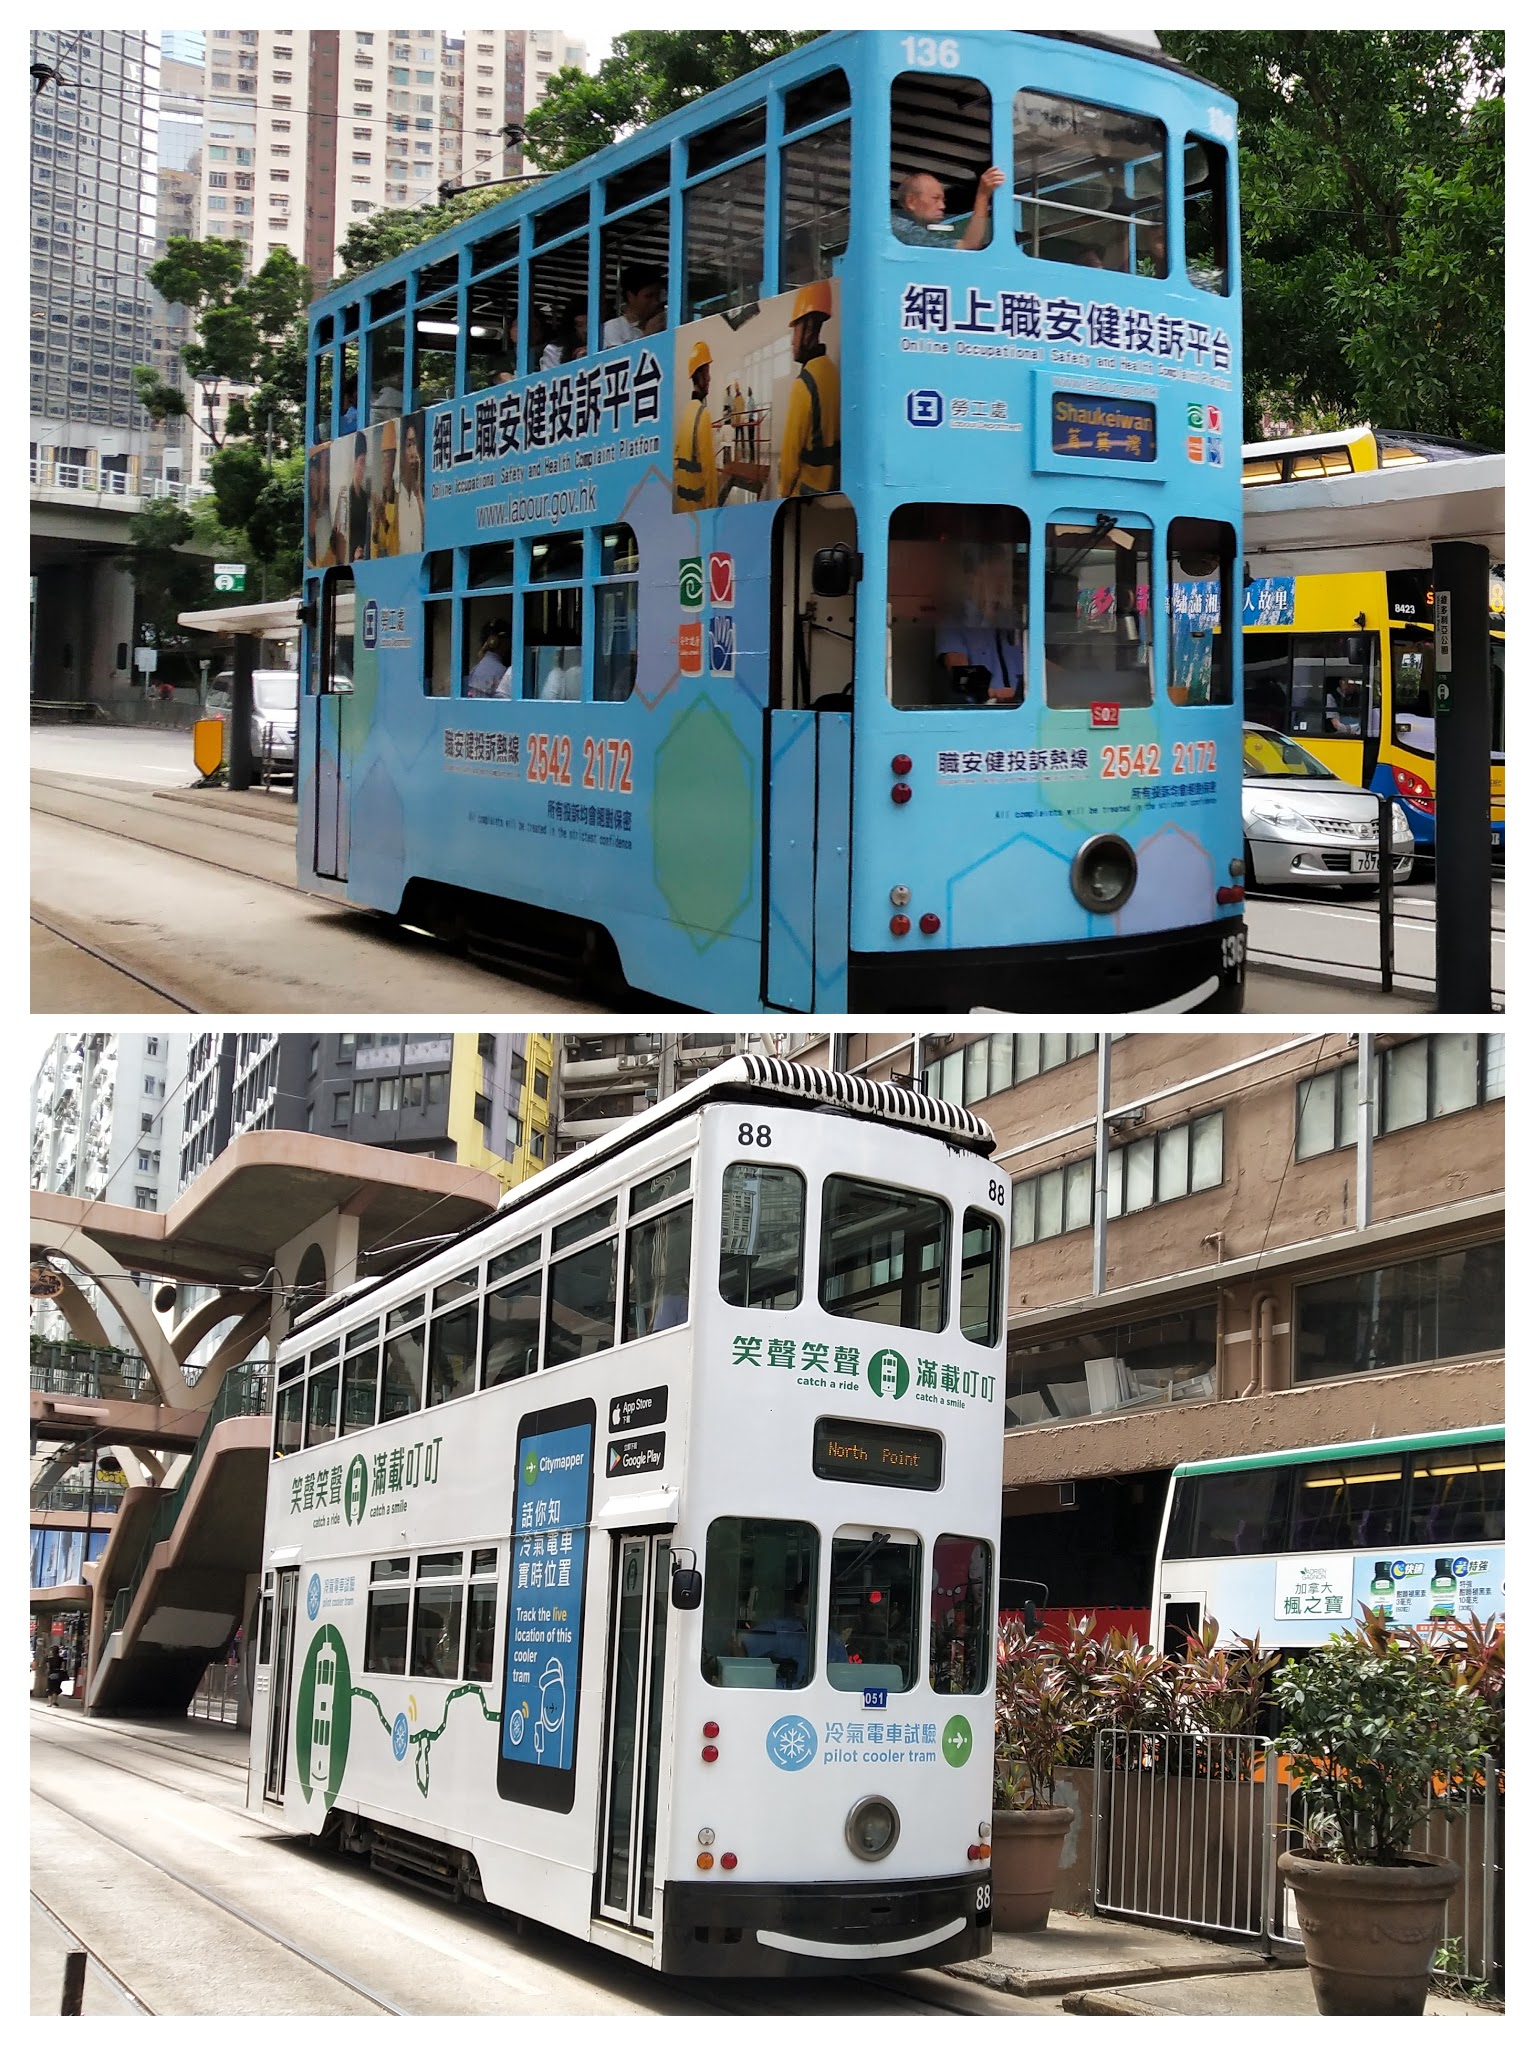 top blue normal double decker tram, bottom air-conditioned double decker tram